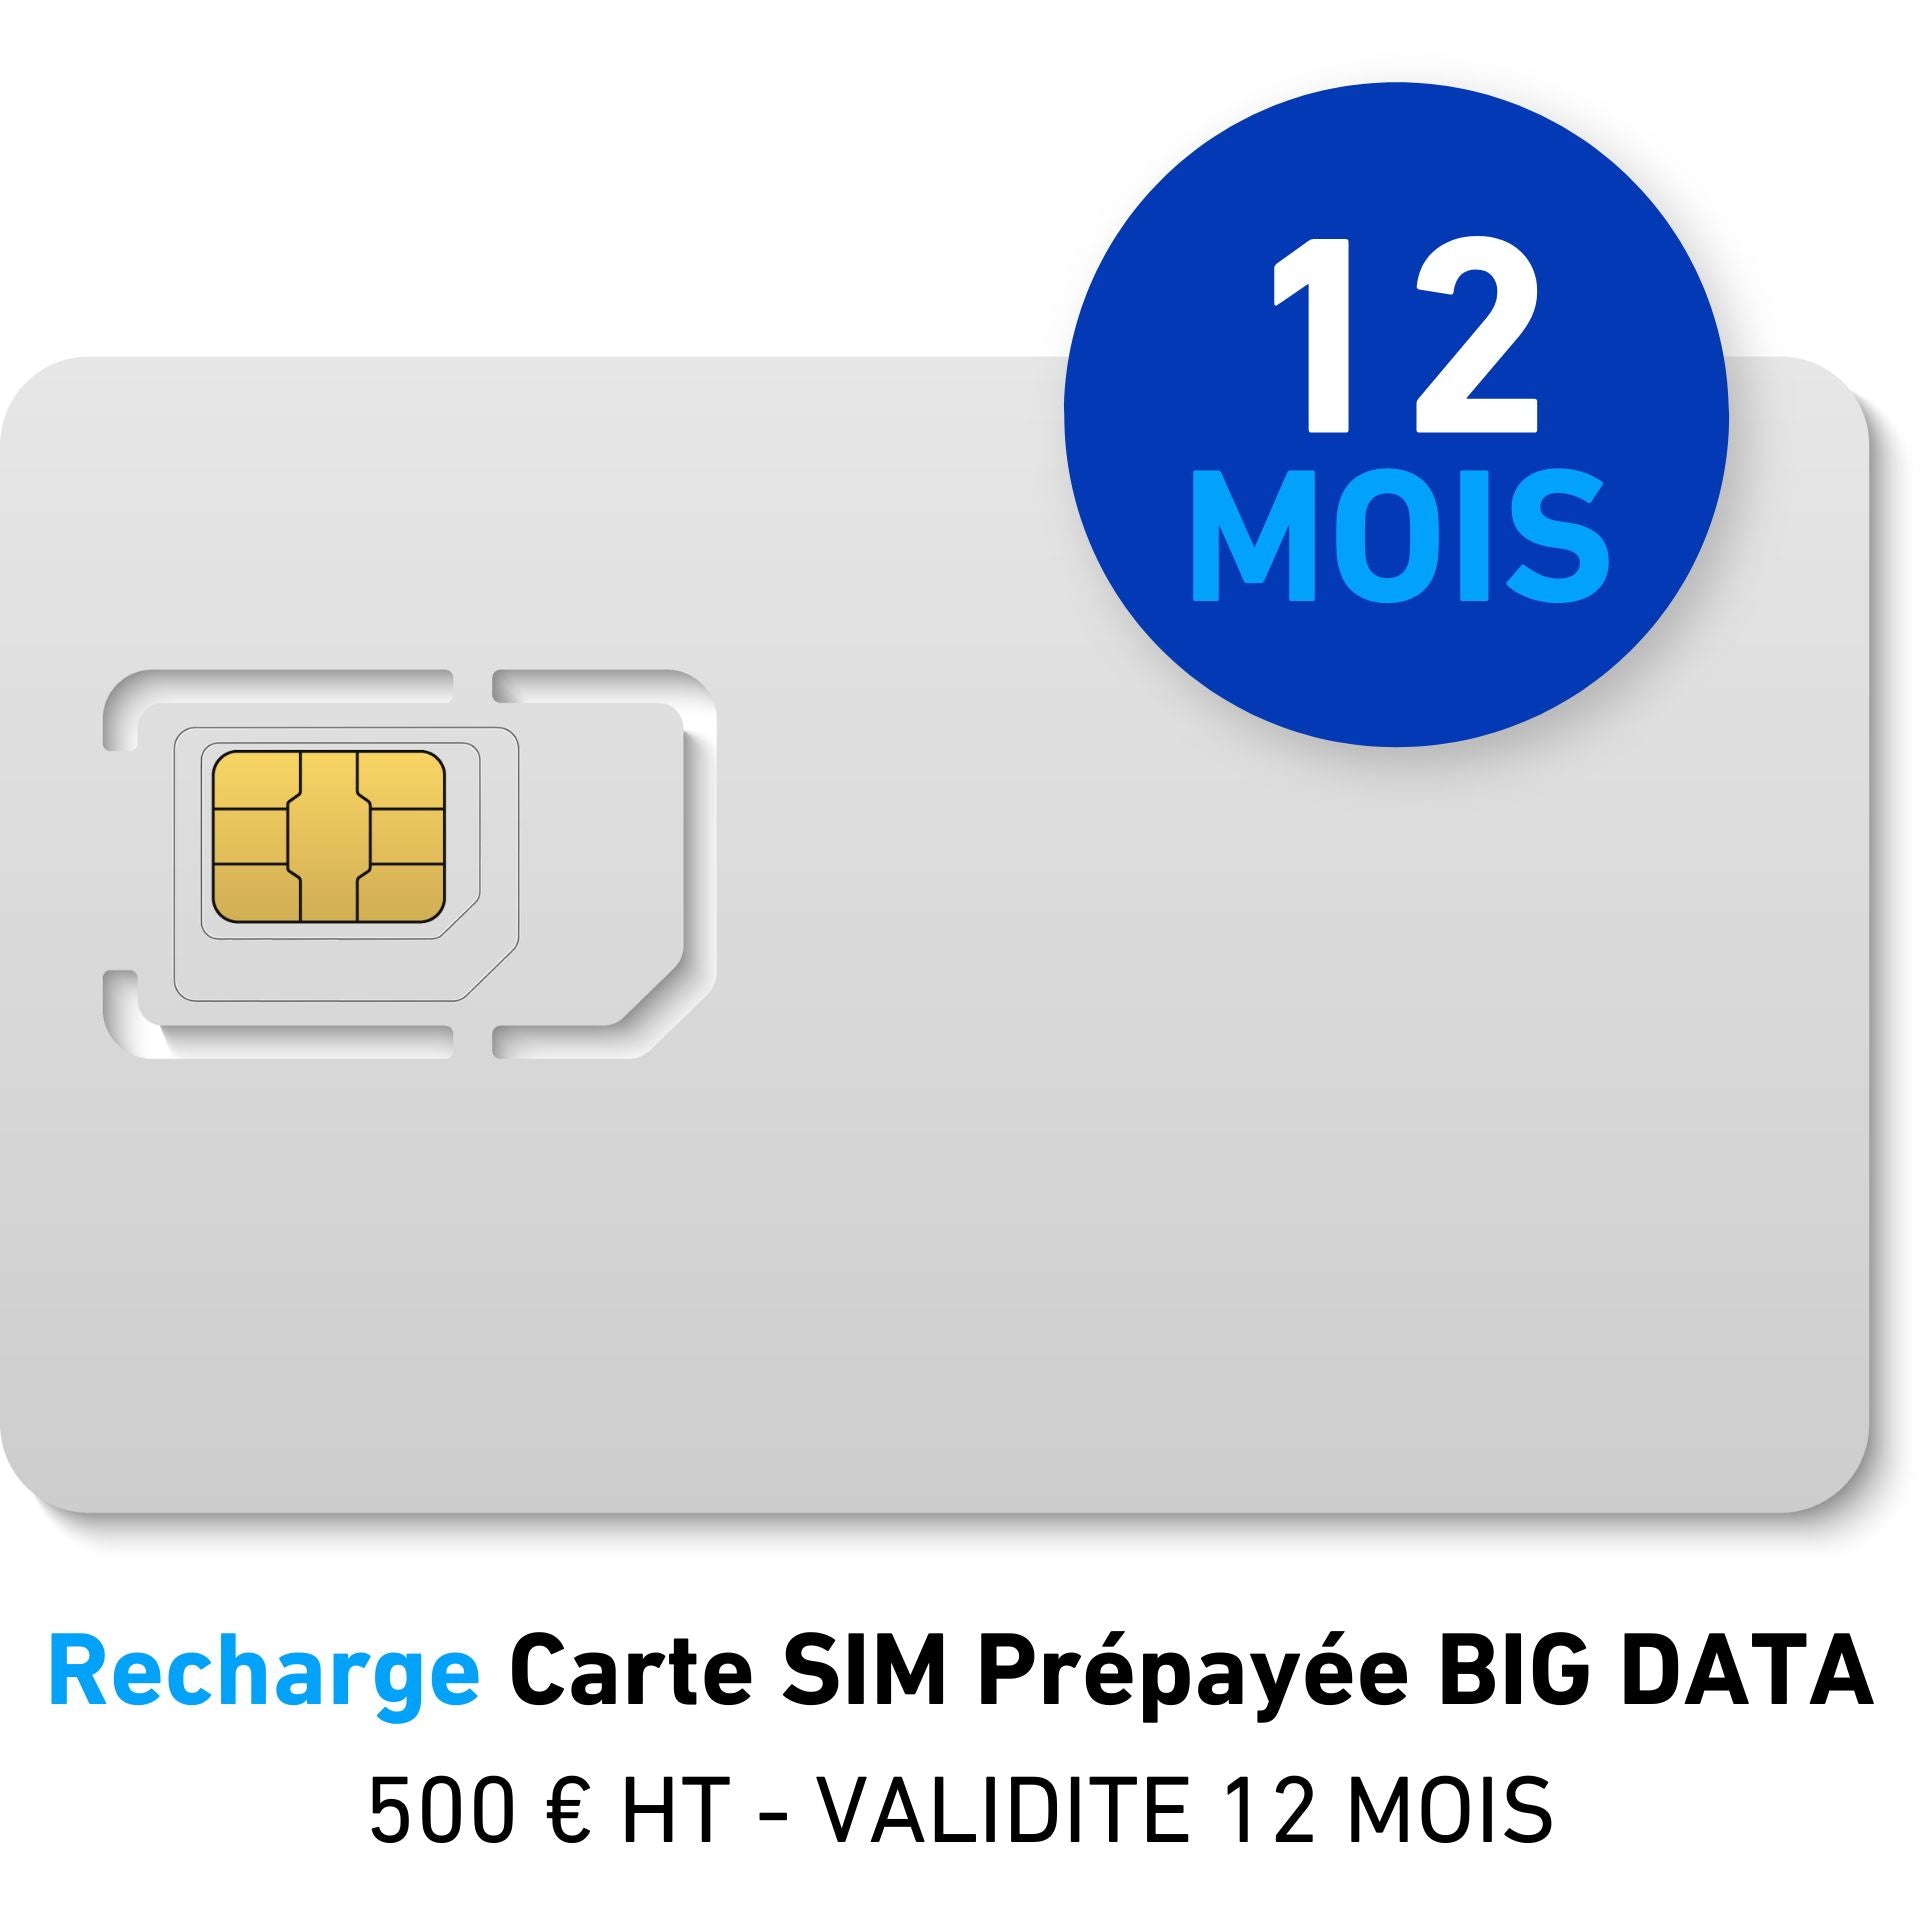 BIG DATA prepaid SIM card refill 500 € HT - VALIDITY 12 MONTHS